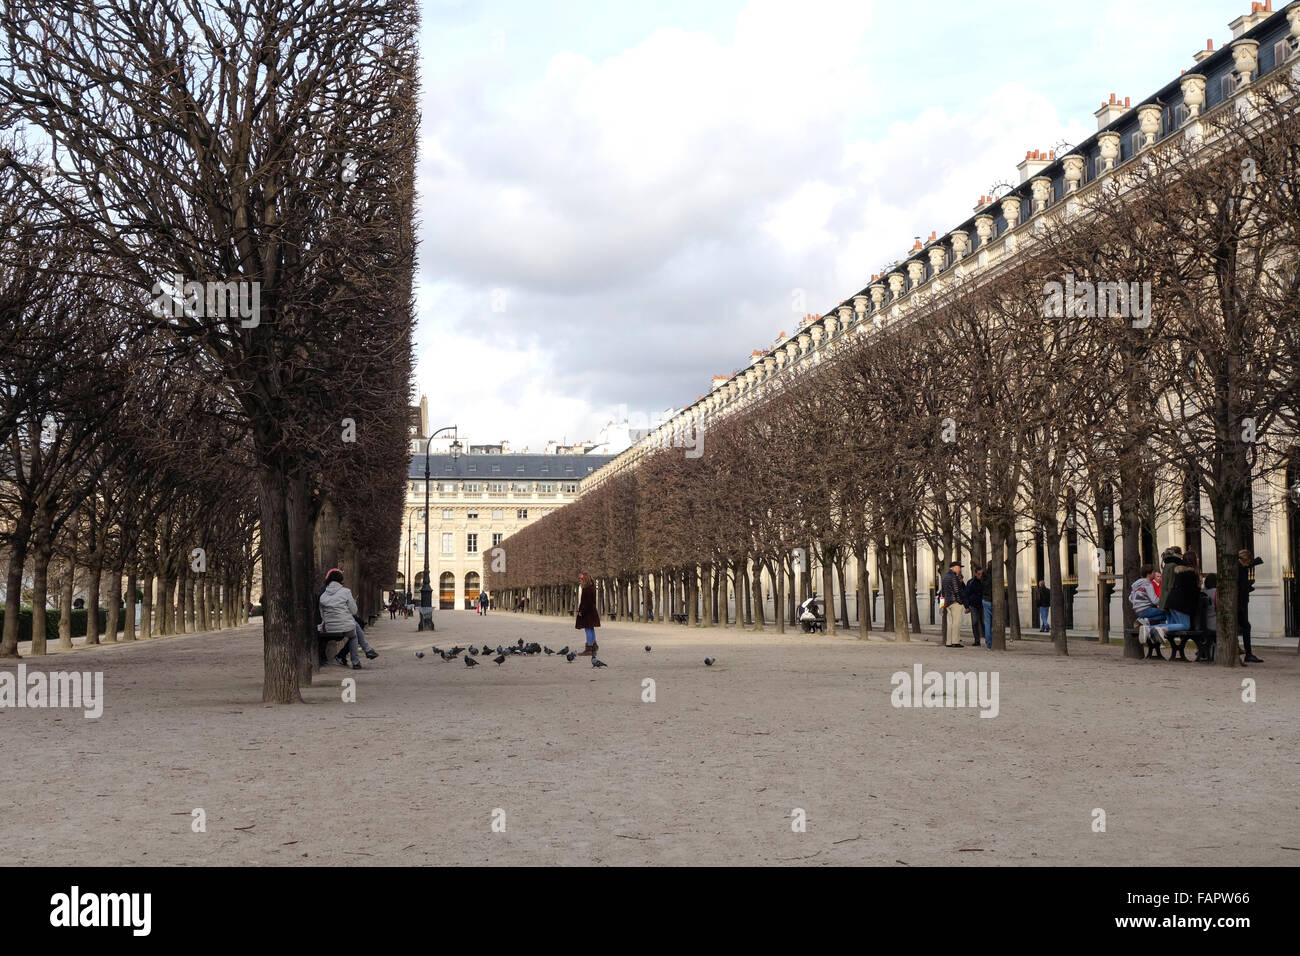 Palais-Royal, Jardin du Palais Royal, garden, park site, Paris, France. Stock Photo